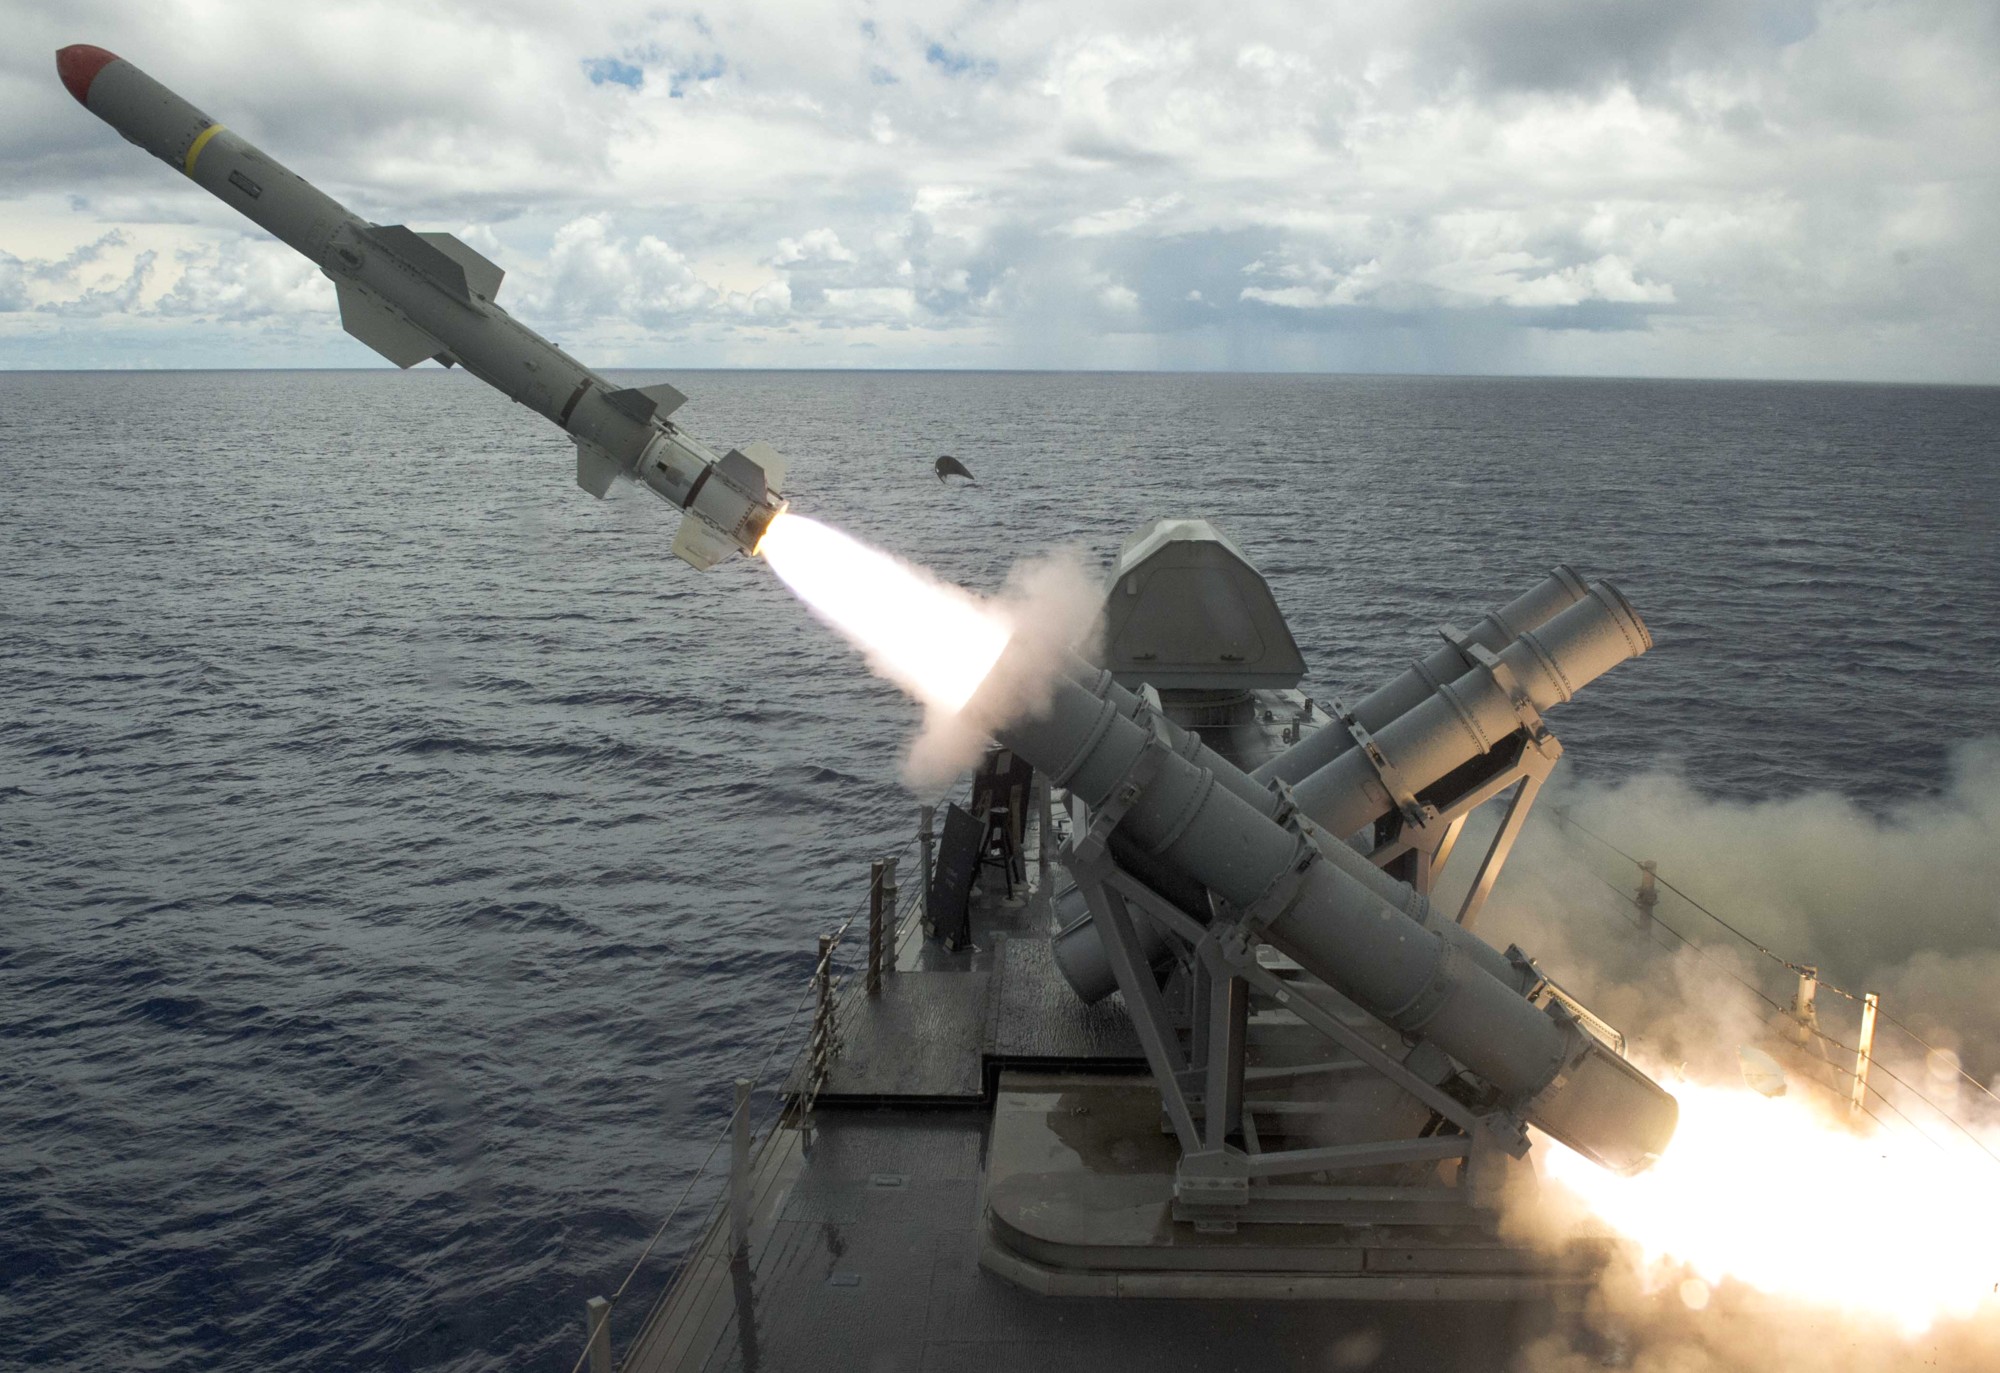 lcs-4 uss coronado independence class littoral combat ship us navy 22 rgm-84 harpoon ssm missile fire